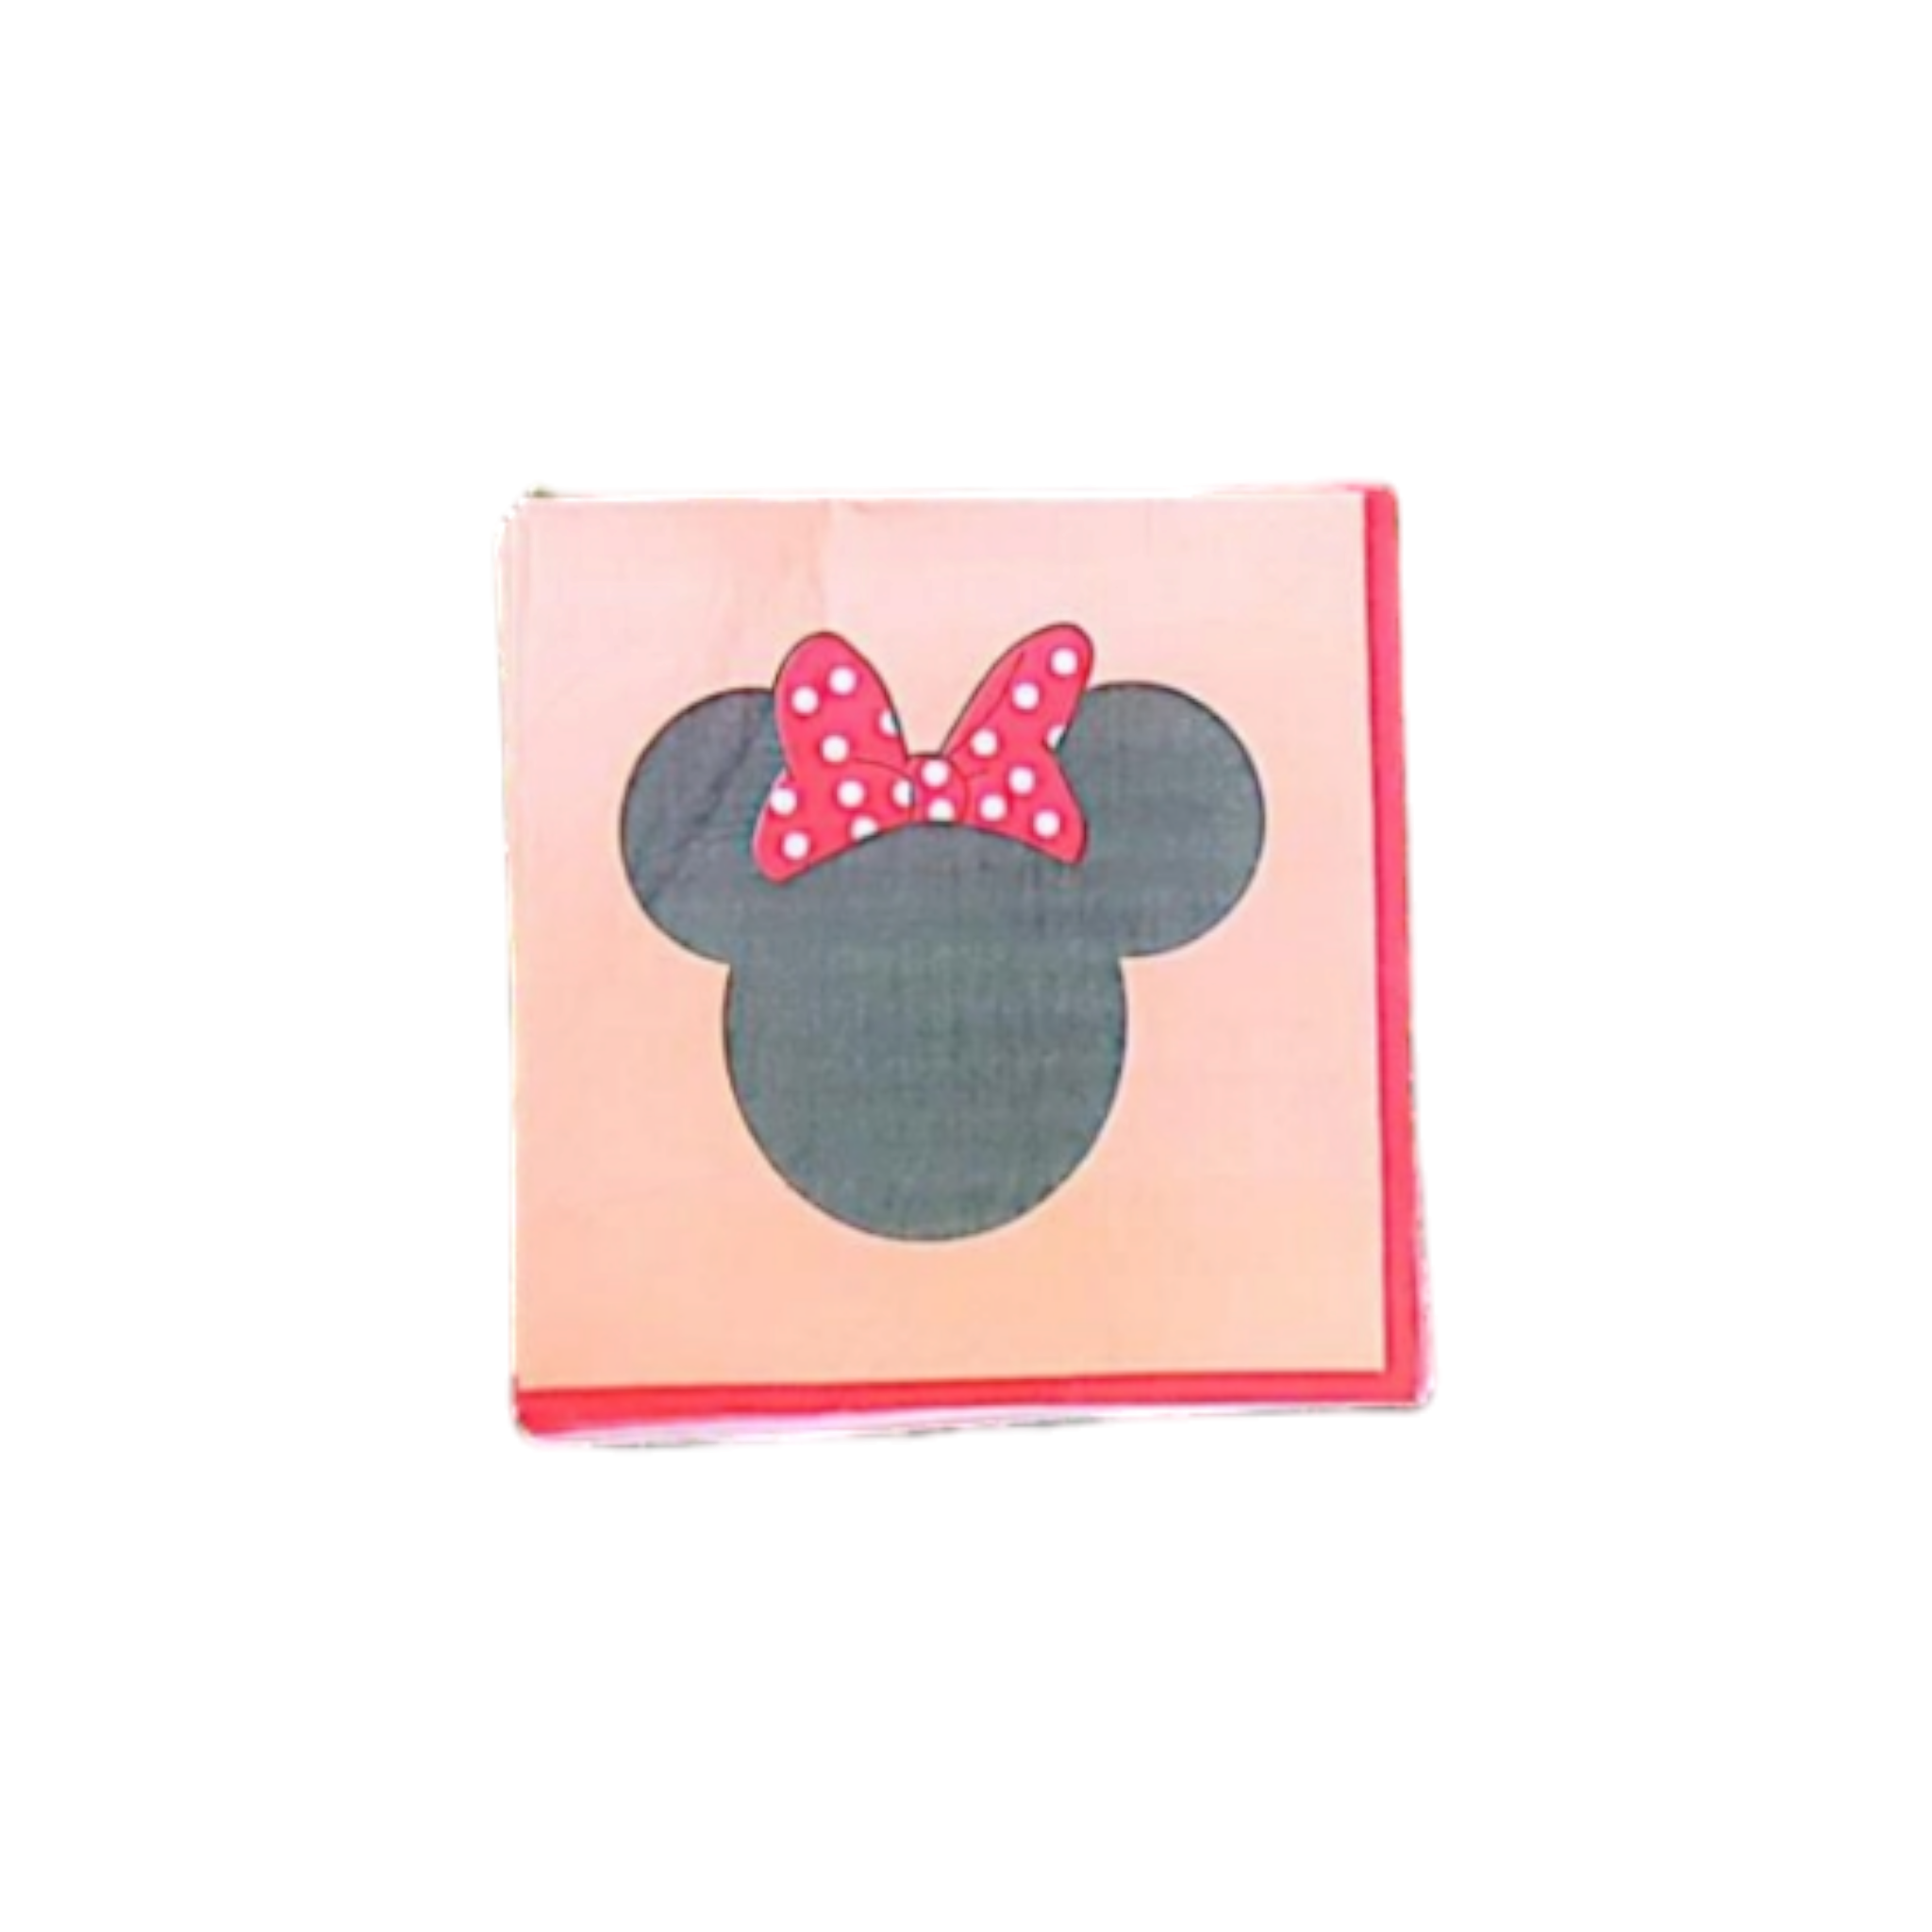 Disney Minnie Mouse Luncheon Party Serviettes Red 2ply 33x33cm 20pcs